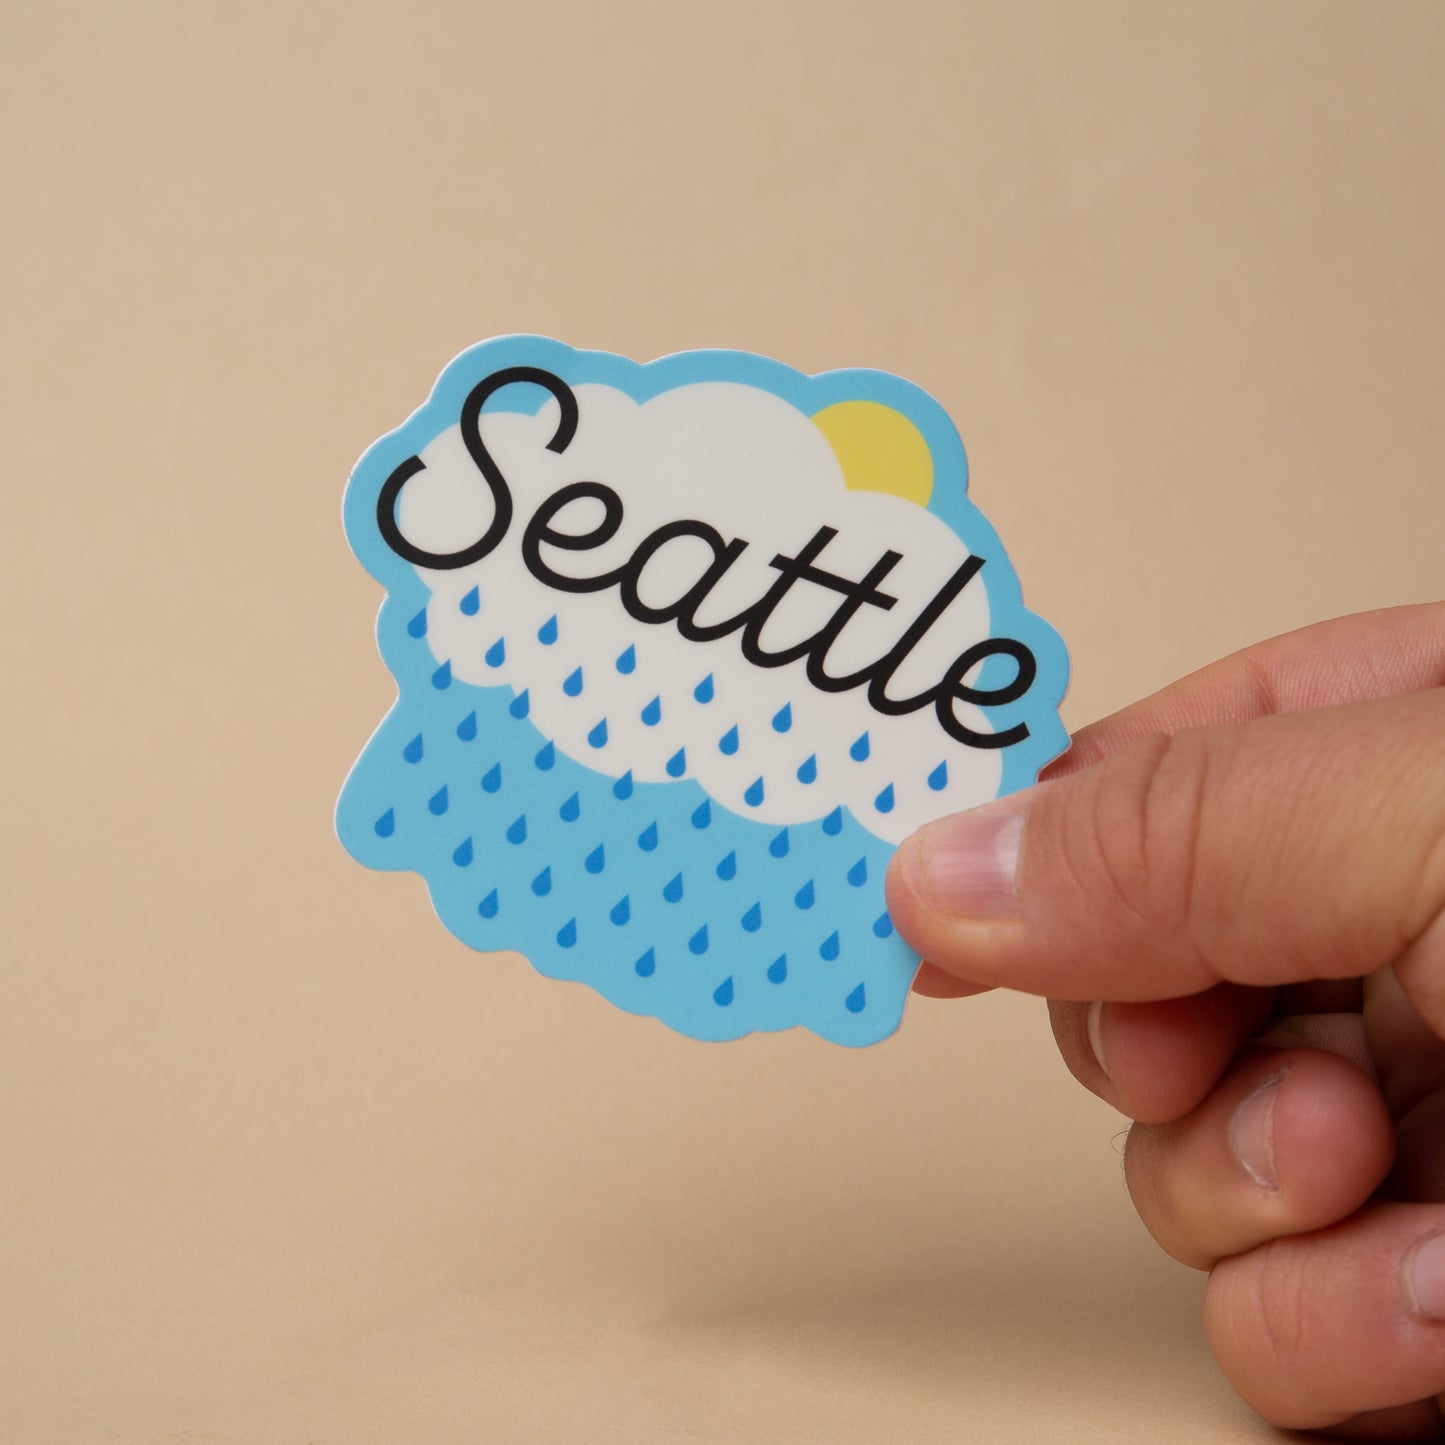 Seattle Rain Sticker